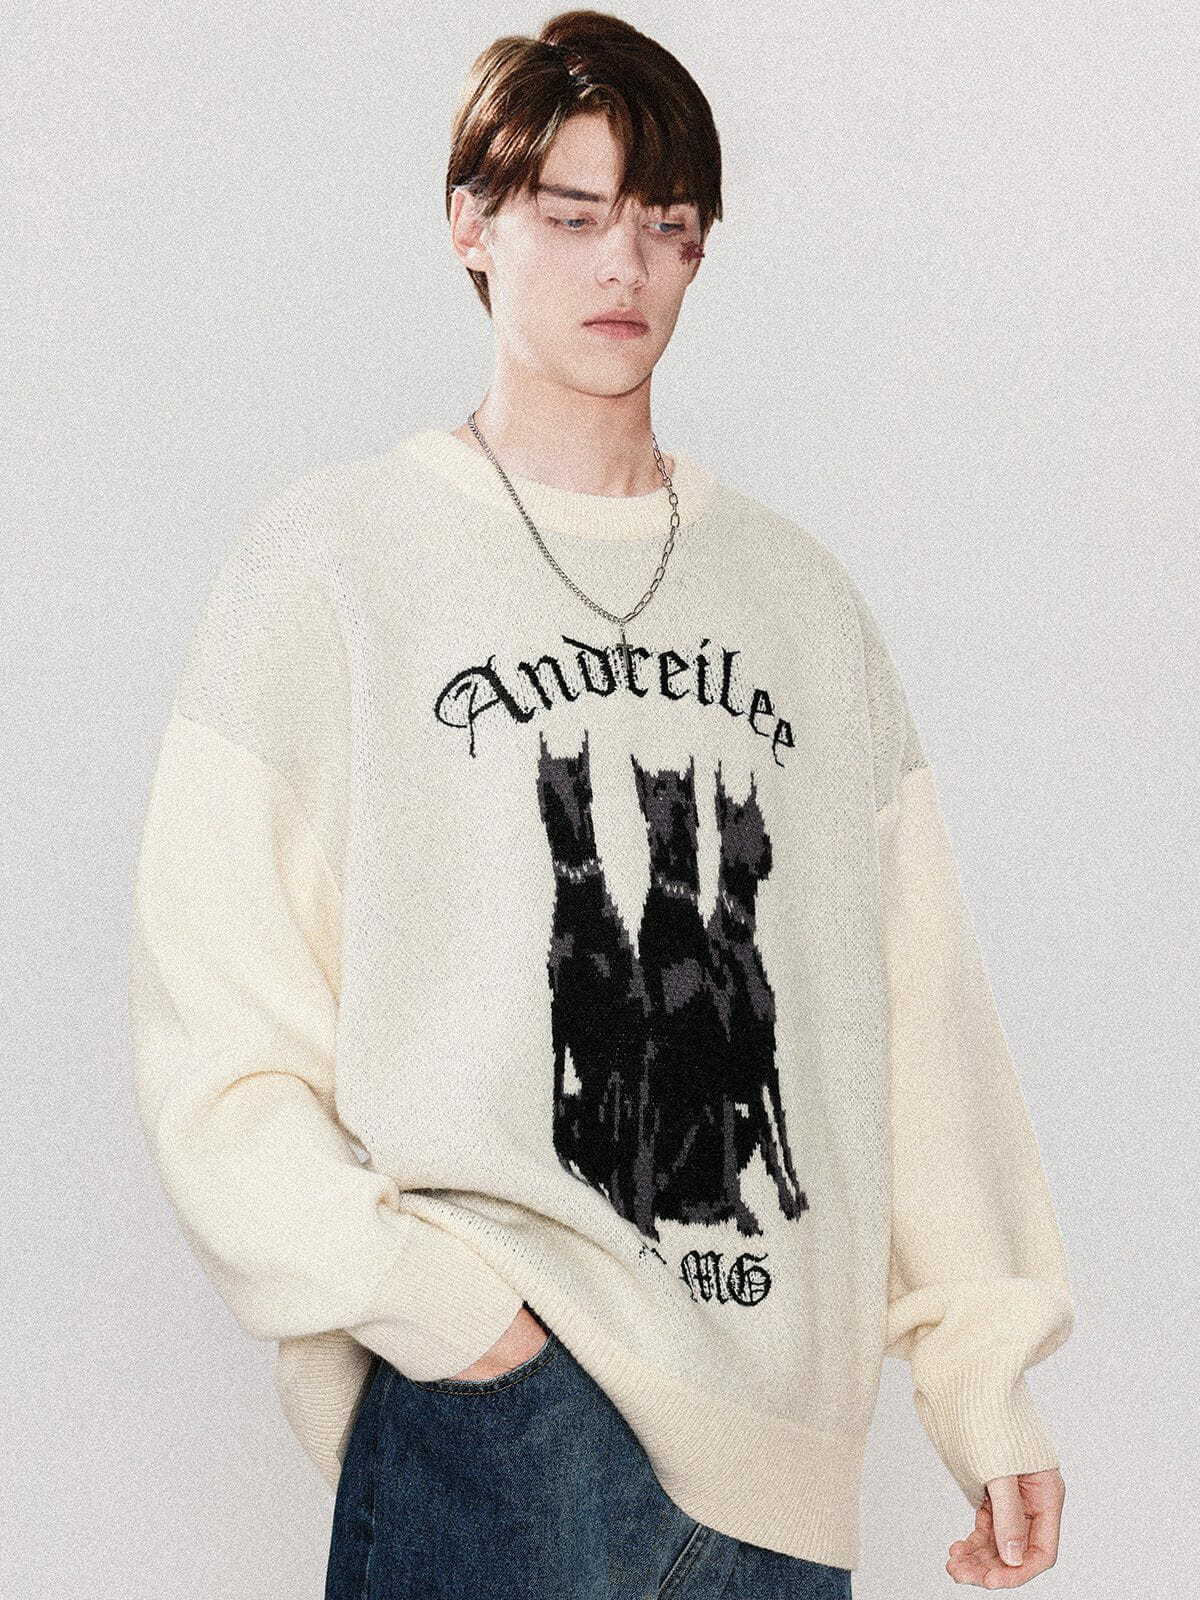 doberman print sweater edgy streetwear statement 3355